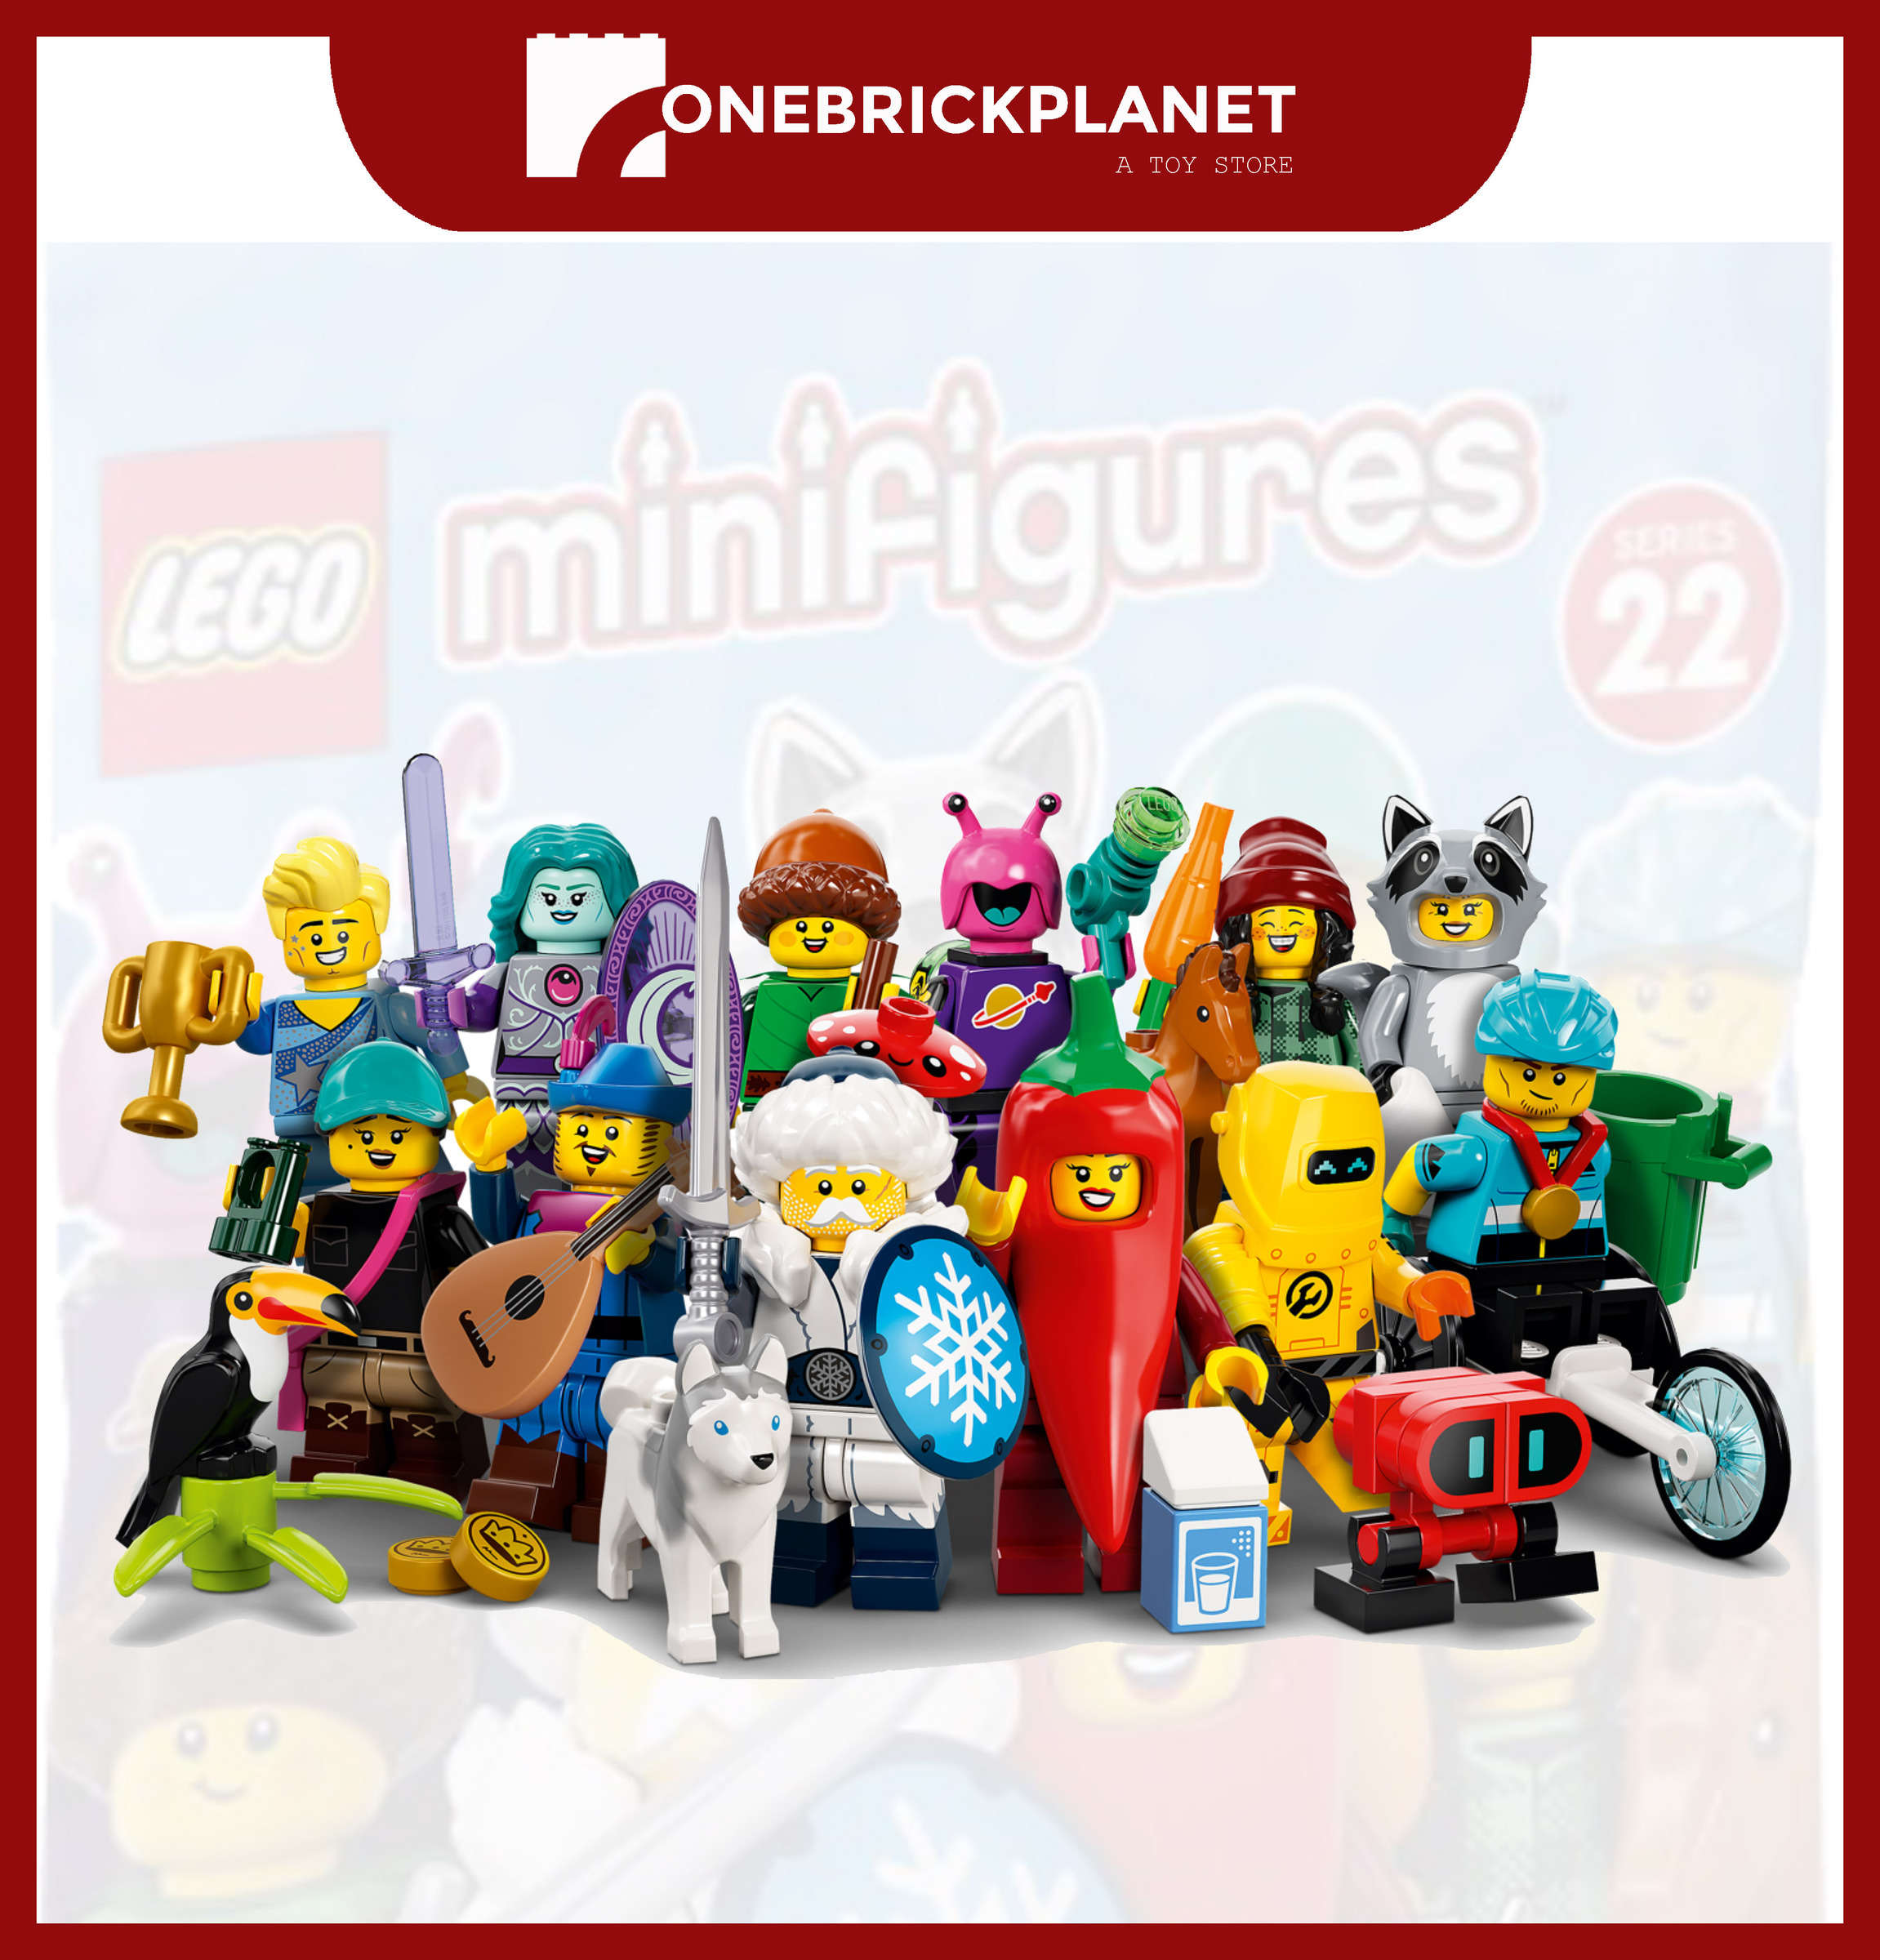 LEGO Minifigure Series 22: Robot Repair Tech (71032) SEALED